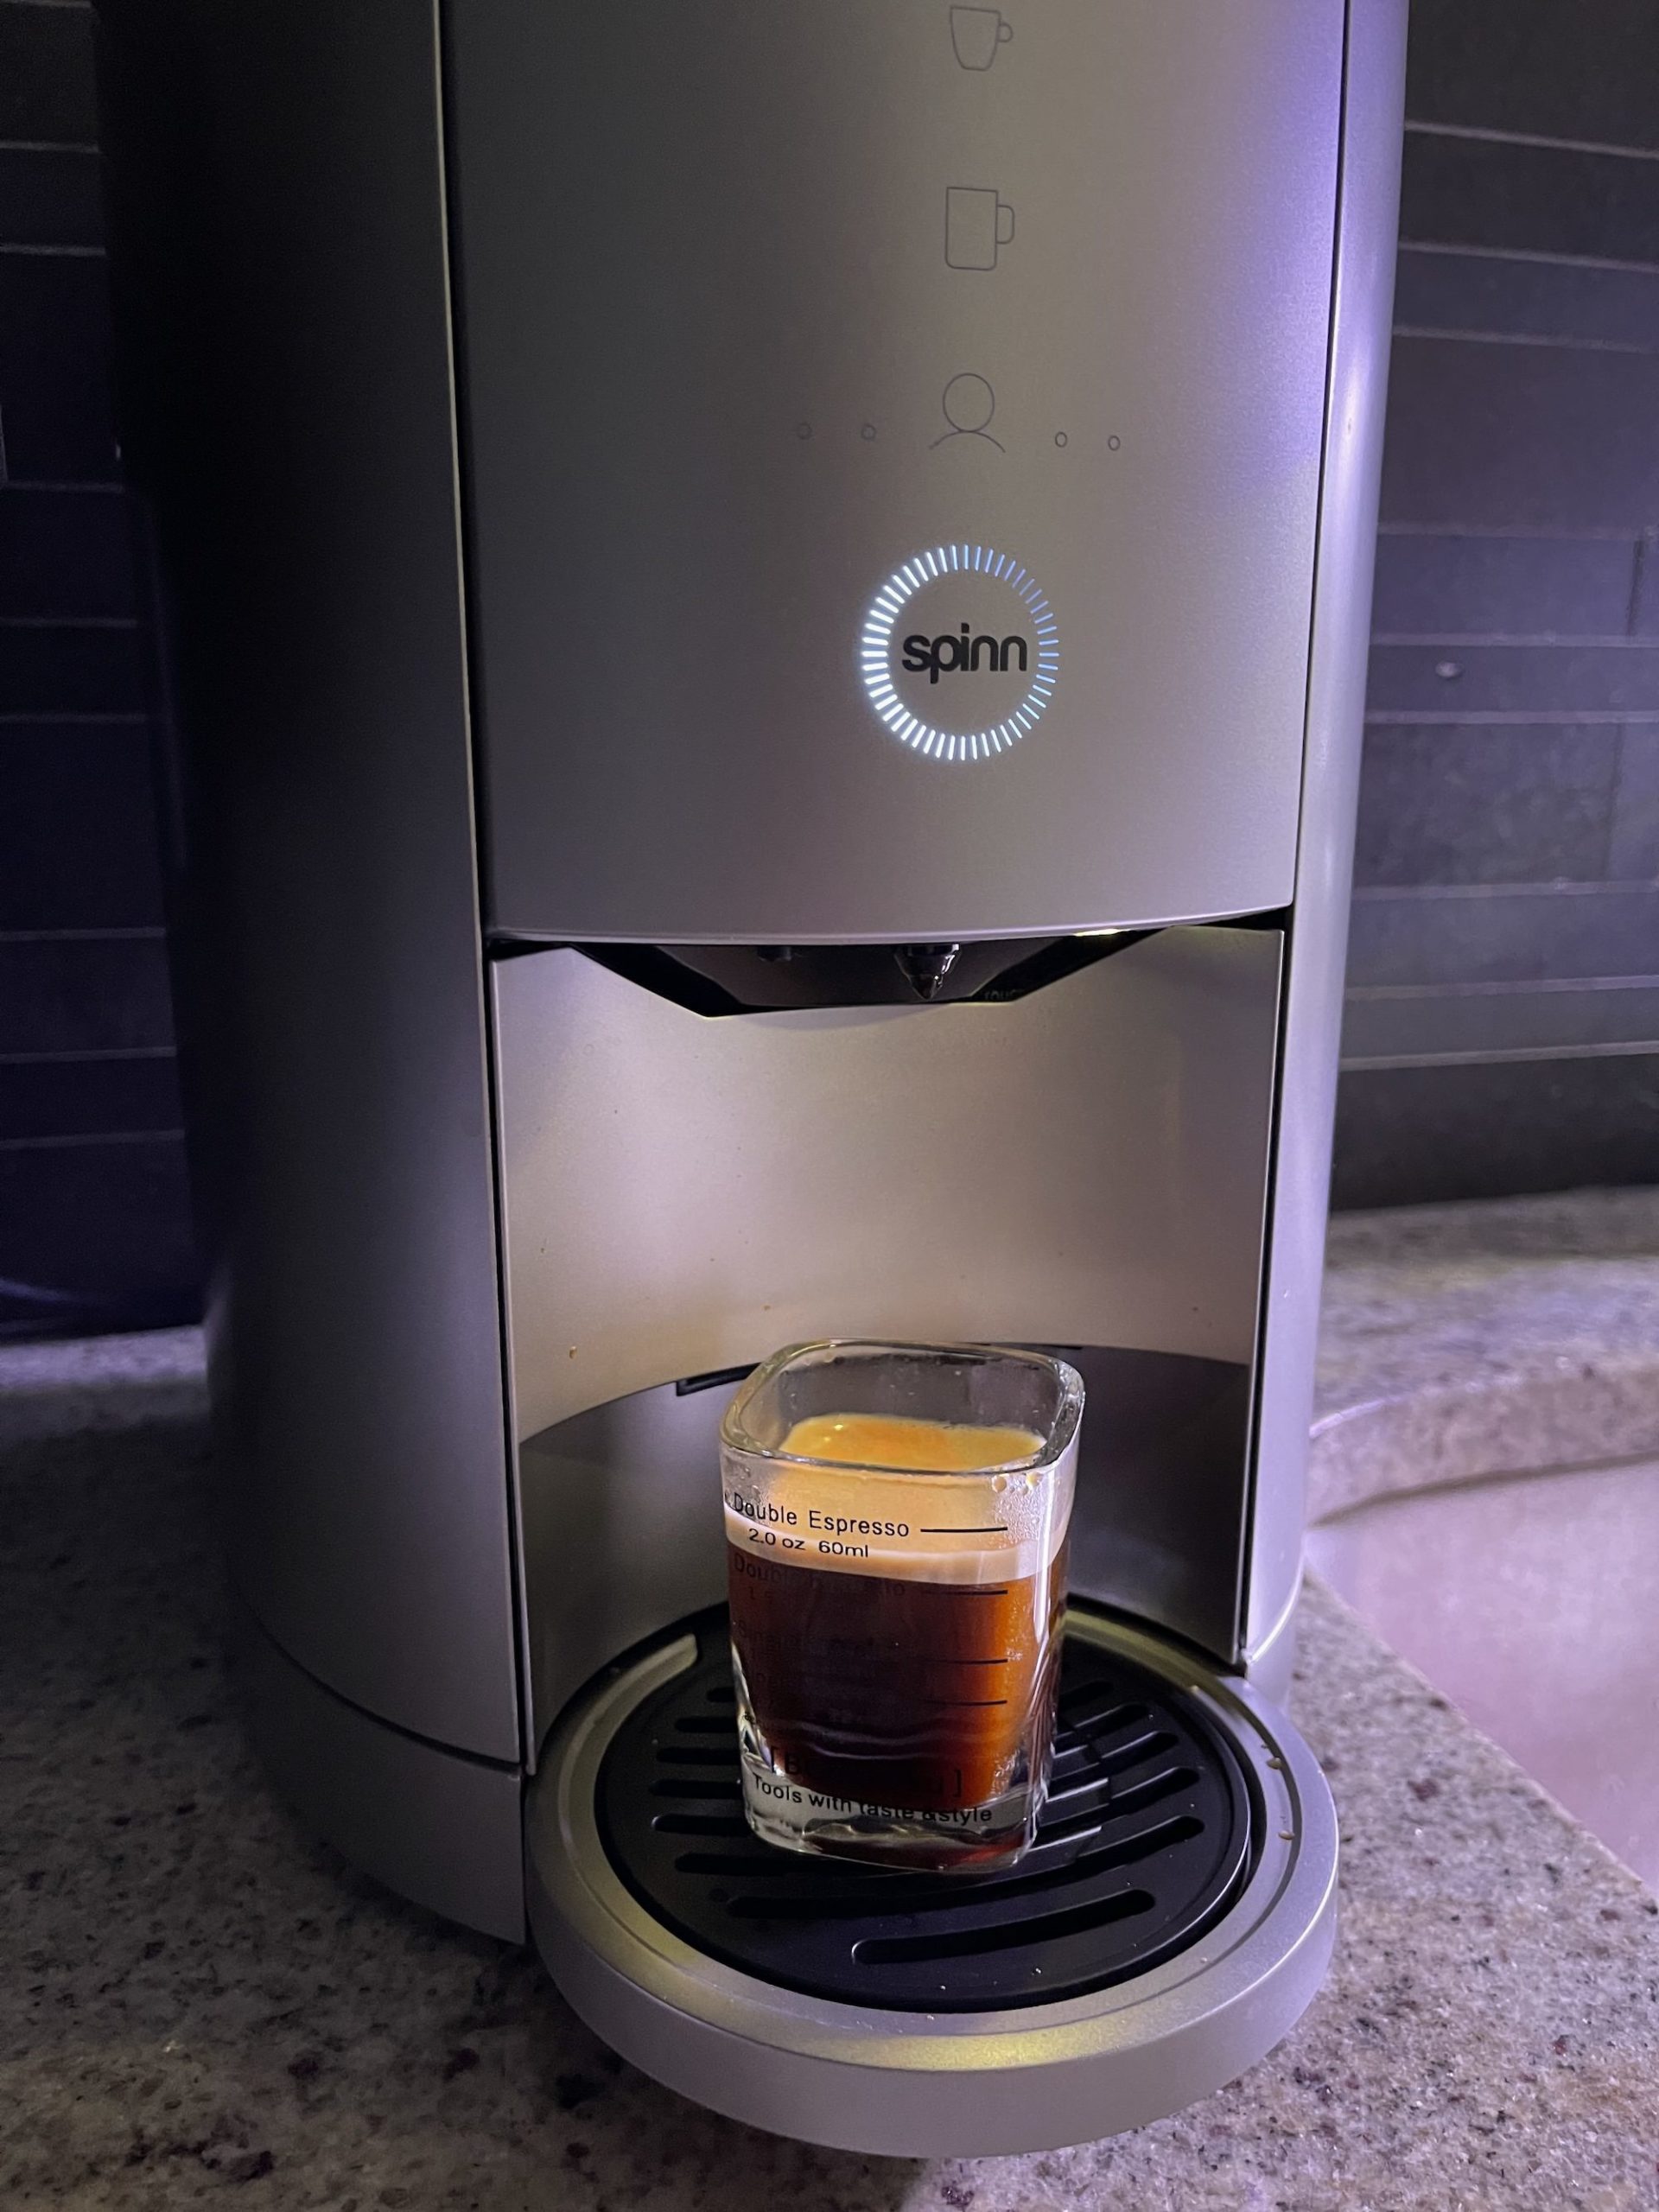 https://rk.md/wp-content/uploads/2021/12/spinn-espresso-scaled.jpg